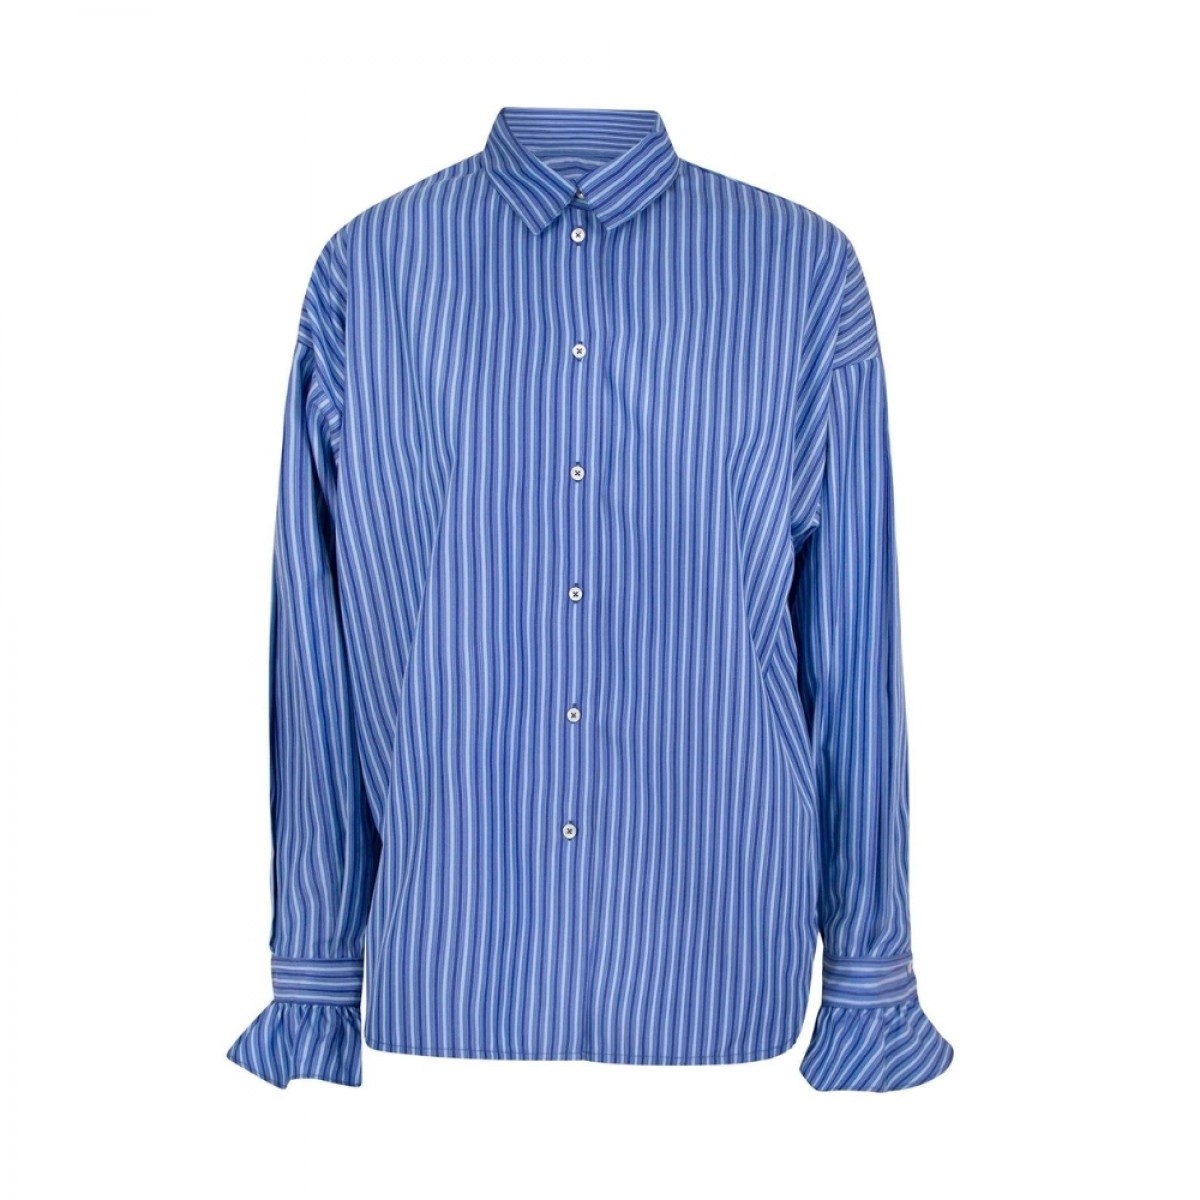 uma shirt - blue horizon - front